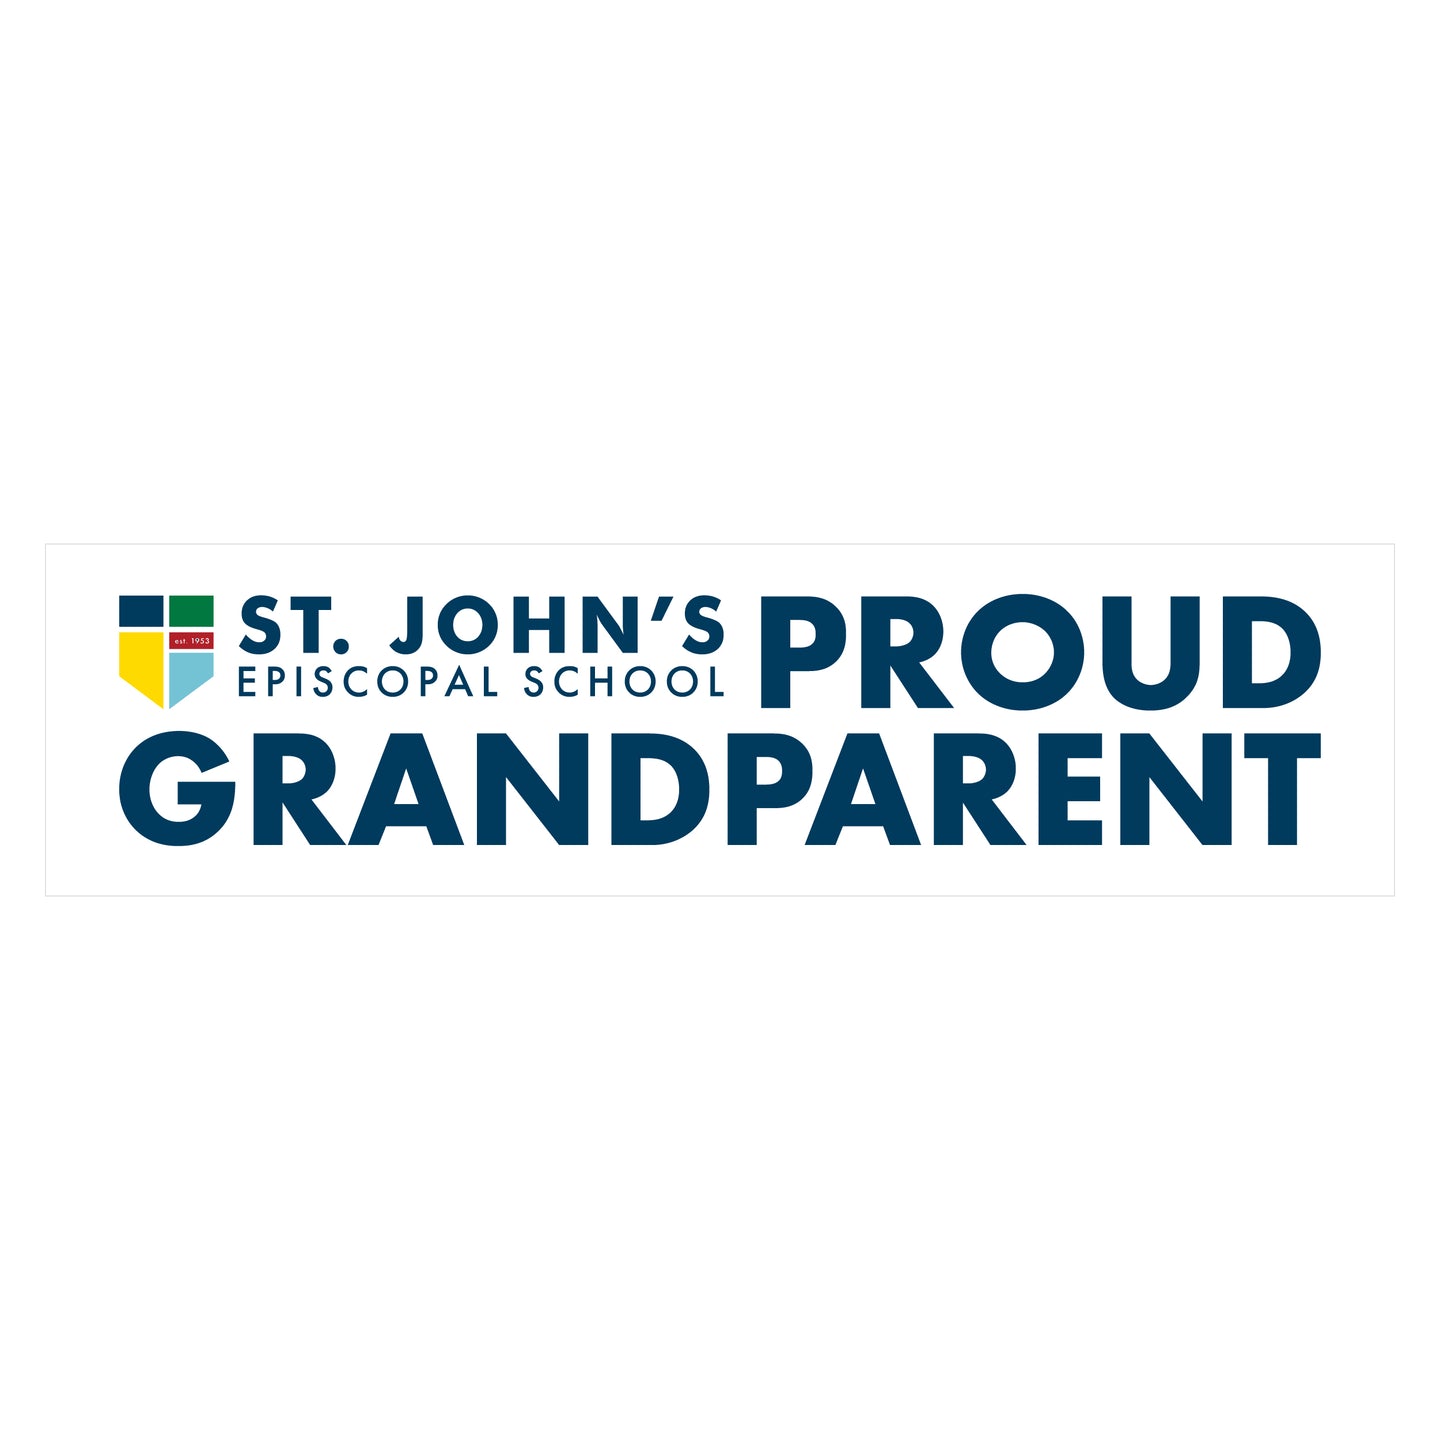 ST. JOHN'S PROUD GRANDPARENT BUMPER STICKER